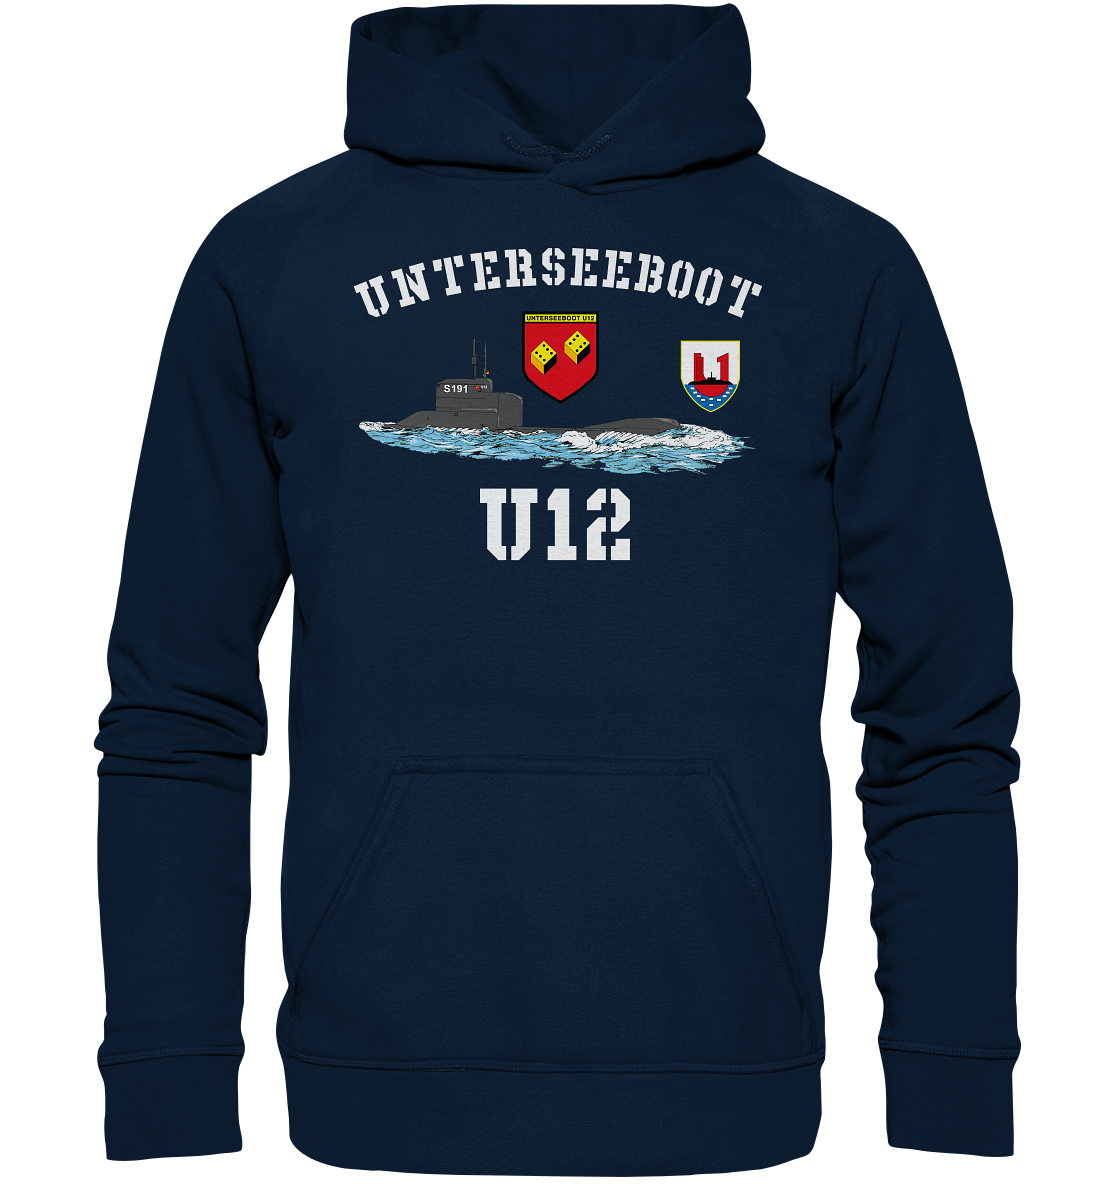 Unterseeboot U12 - Basic Unisex Hoodie XL